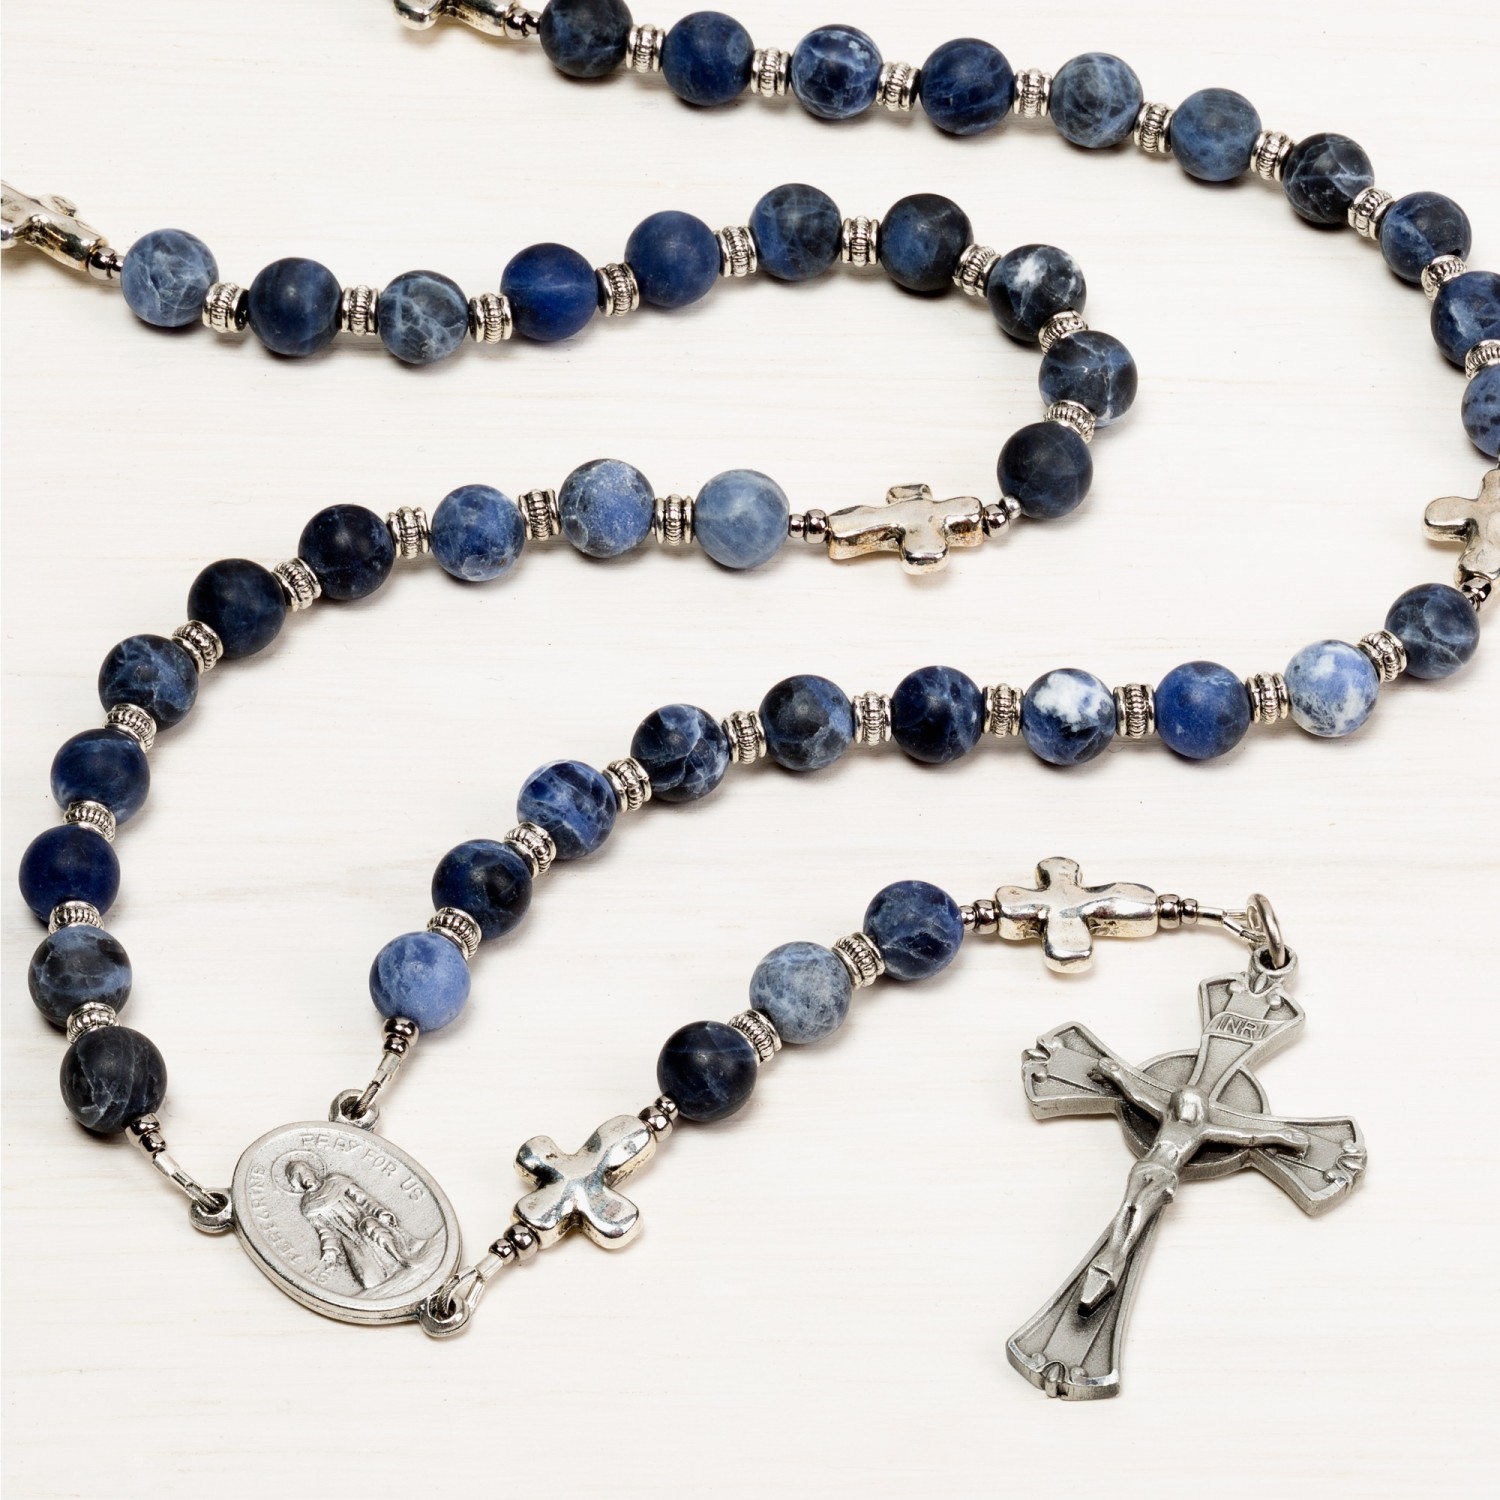  Aqua Blue Saint Christopher Protect Us Words On Nickel